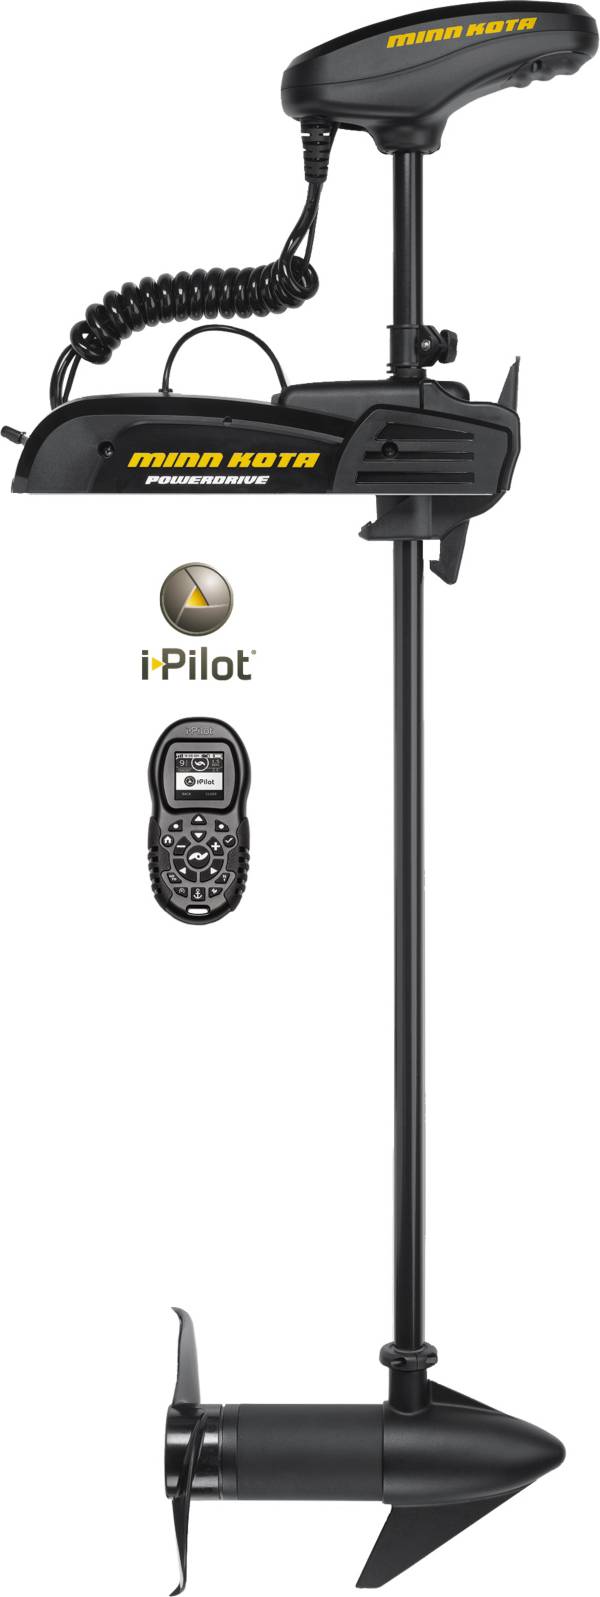 Minn Kota PowerDrive Bow Mount Trolling Motor with i-Pilot GPS product image